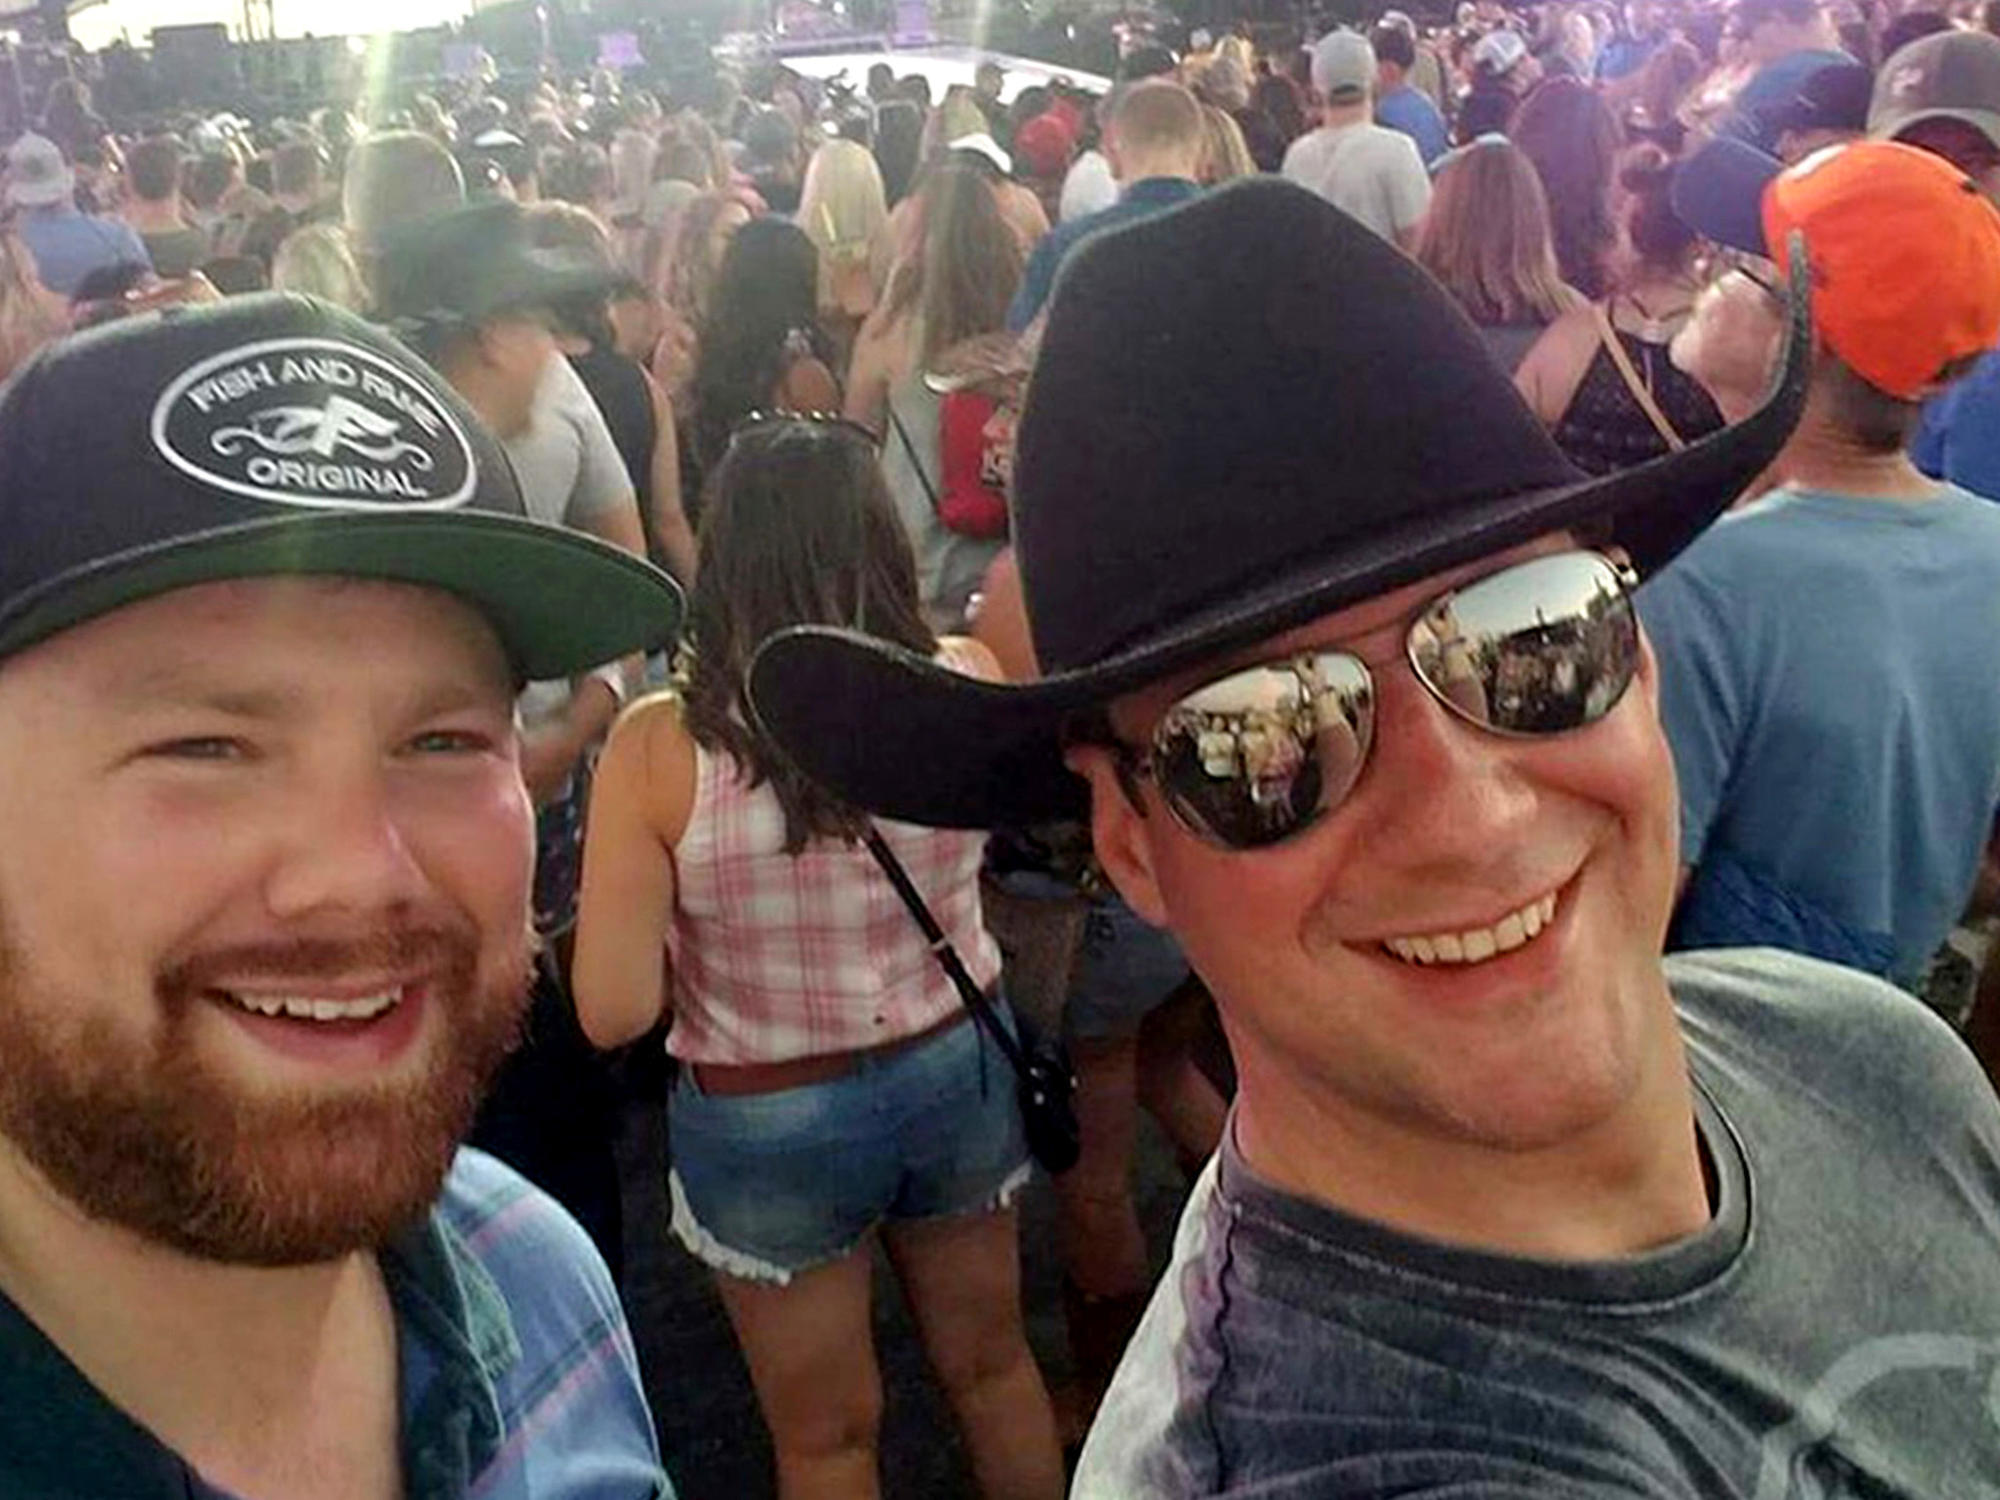 Brian MacKinnon (left) and Adrian Murfitt at the Route 91 Harvest music festival in Las Vegas.